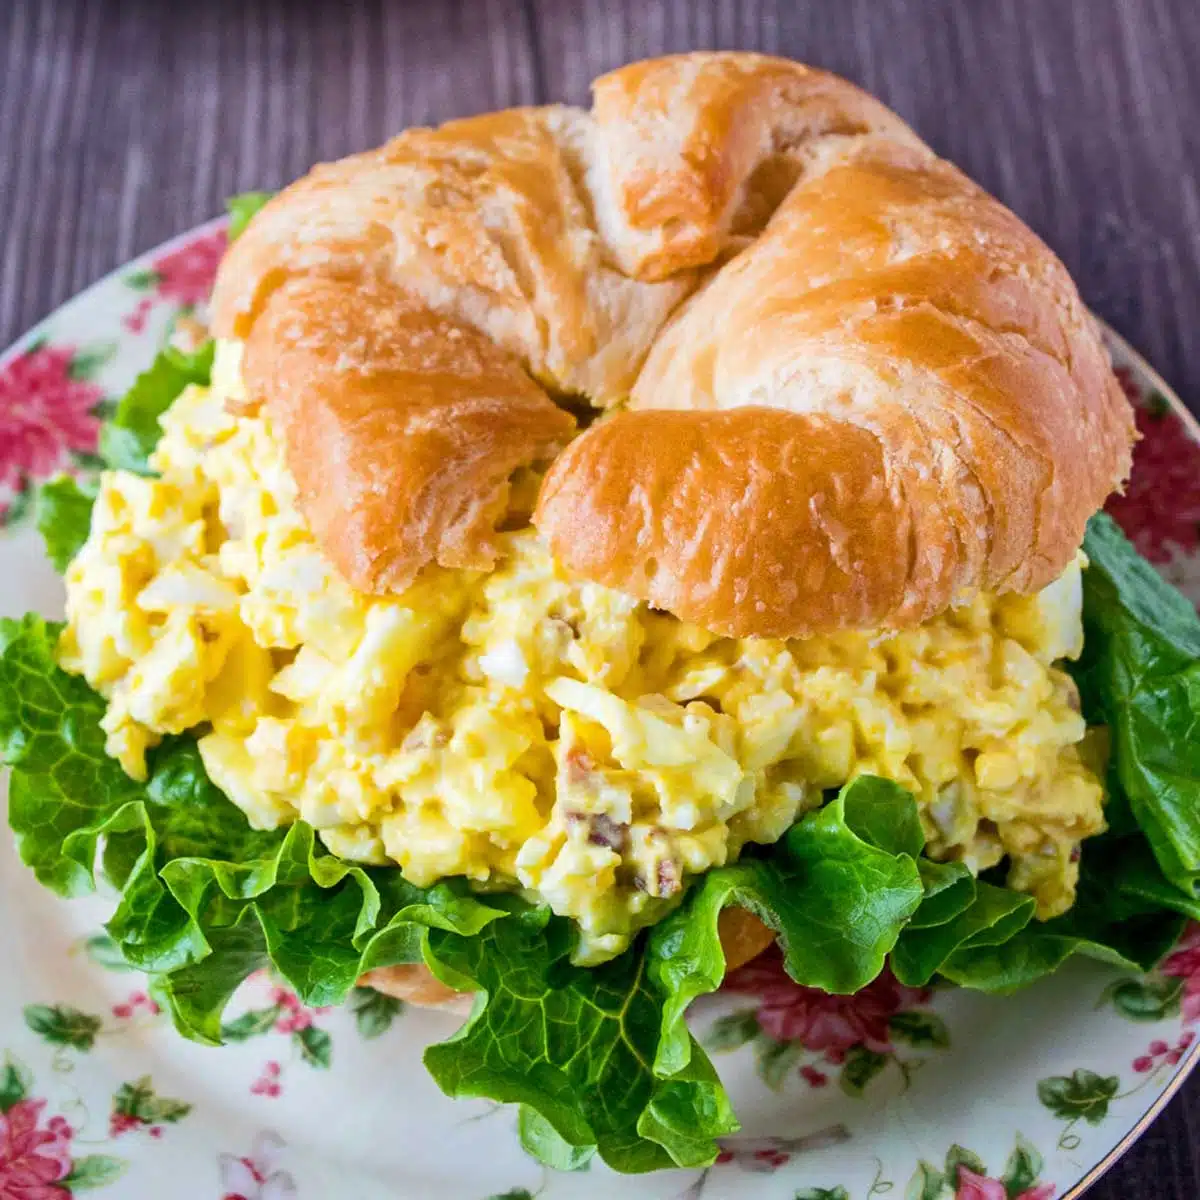 Egg salad sandwich on a floral plate.